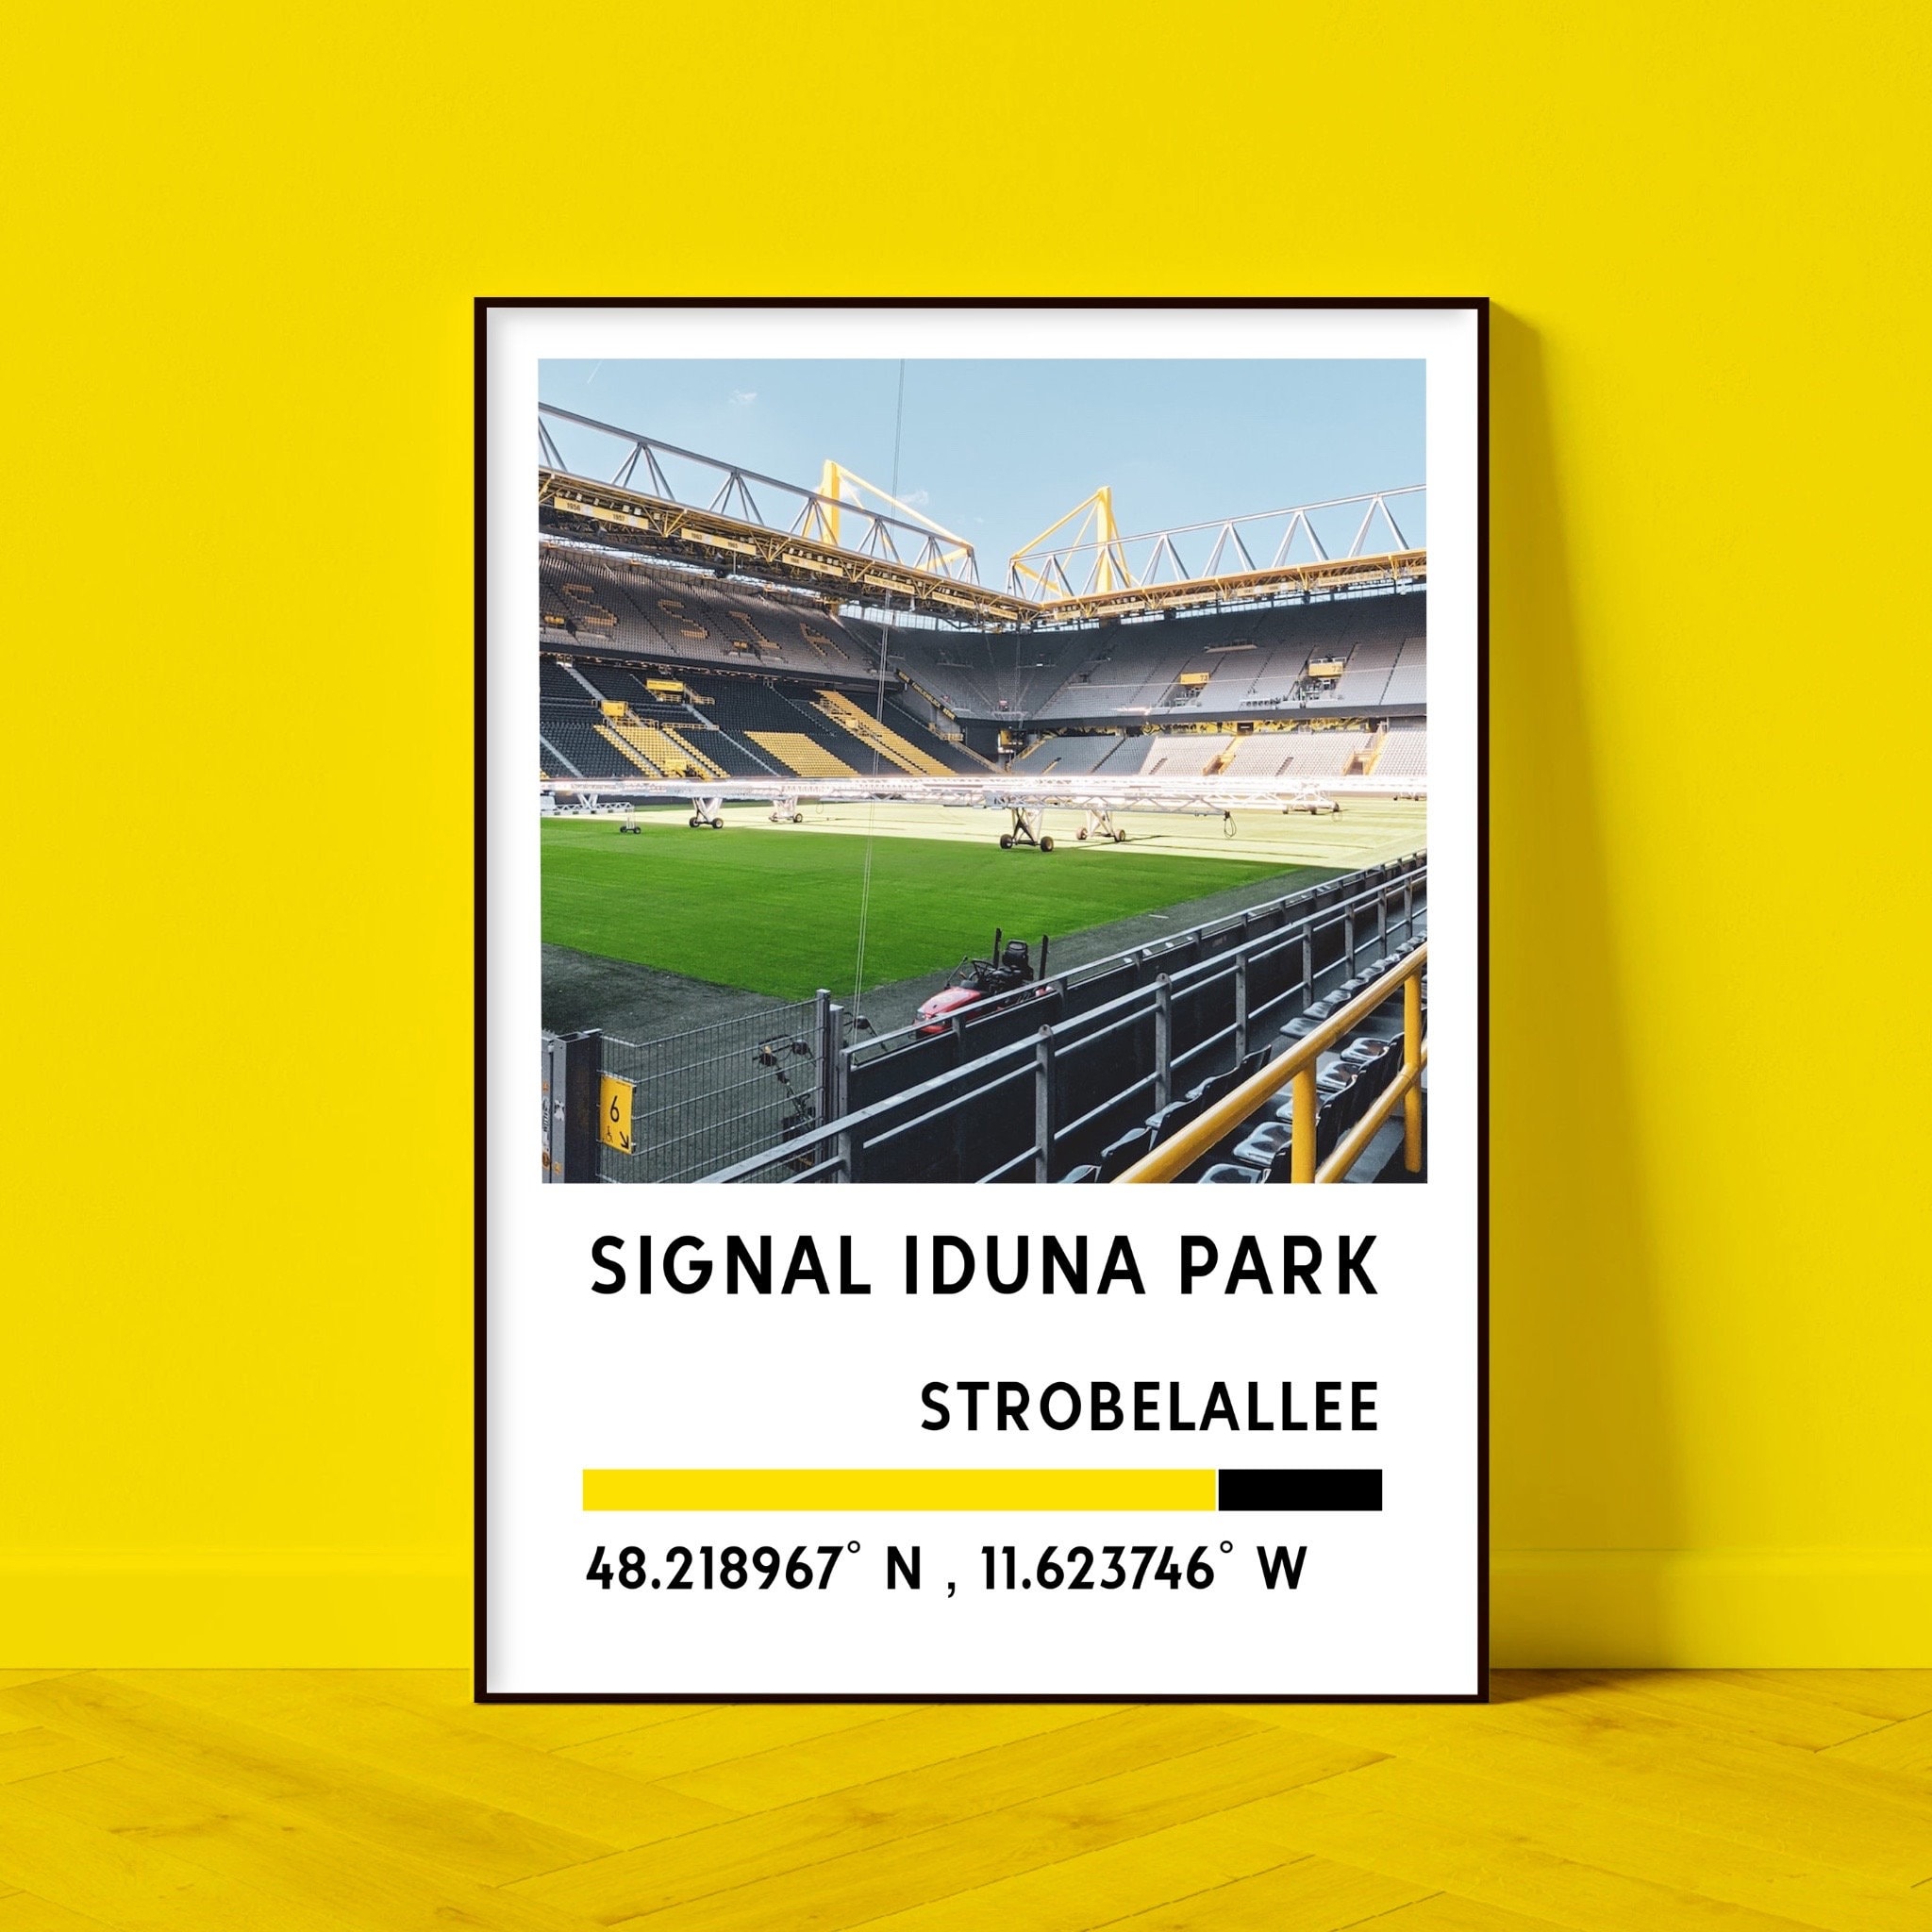 Stadium, Wall Dortmund Borussia - Poster Dortmund, Westfalenstadion, Borussia Borussia Dortmund Etsy Printables, Stadium Iduna Art Park Signal